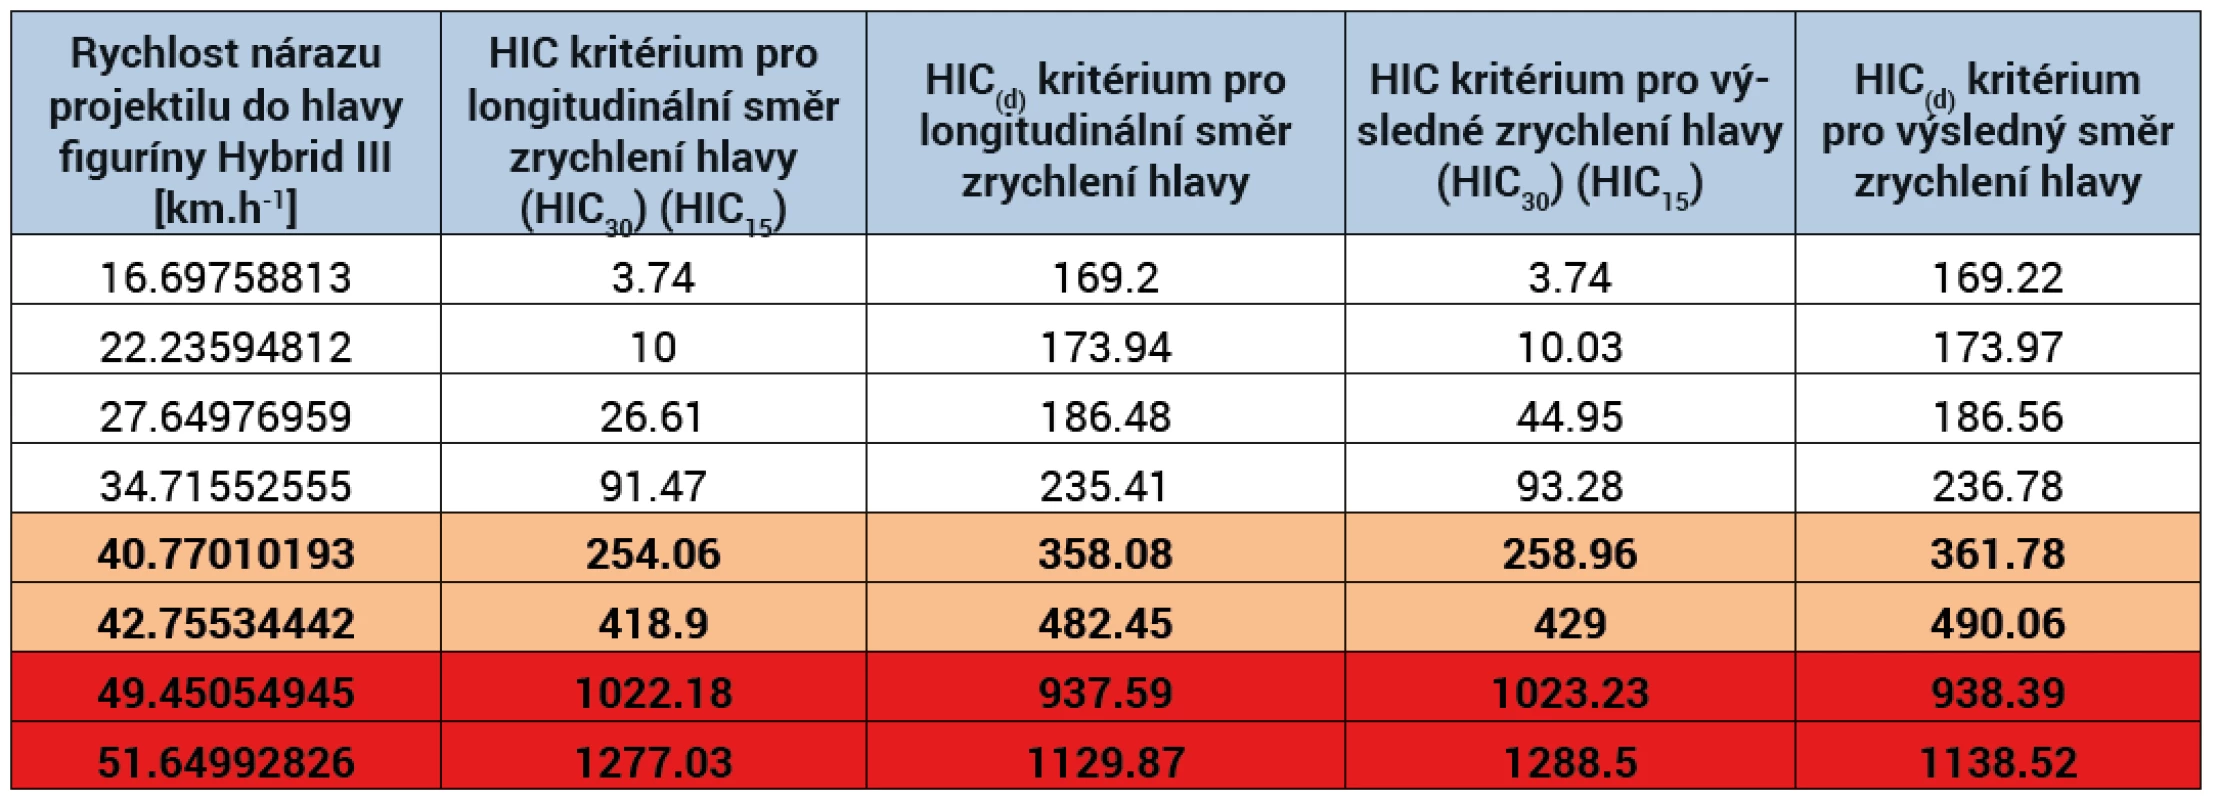 Hodnoty HIC kritéria pro figurínu Hybrid III